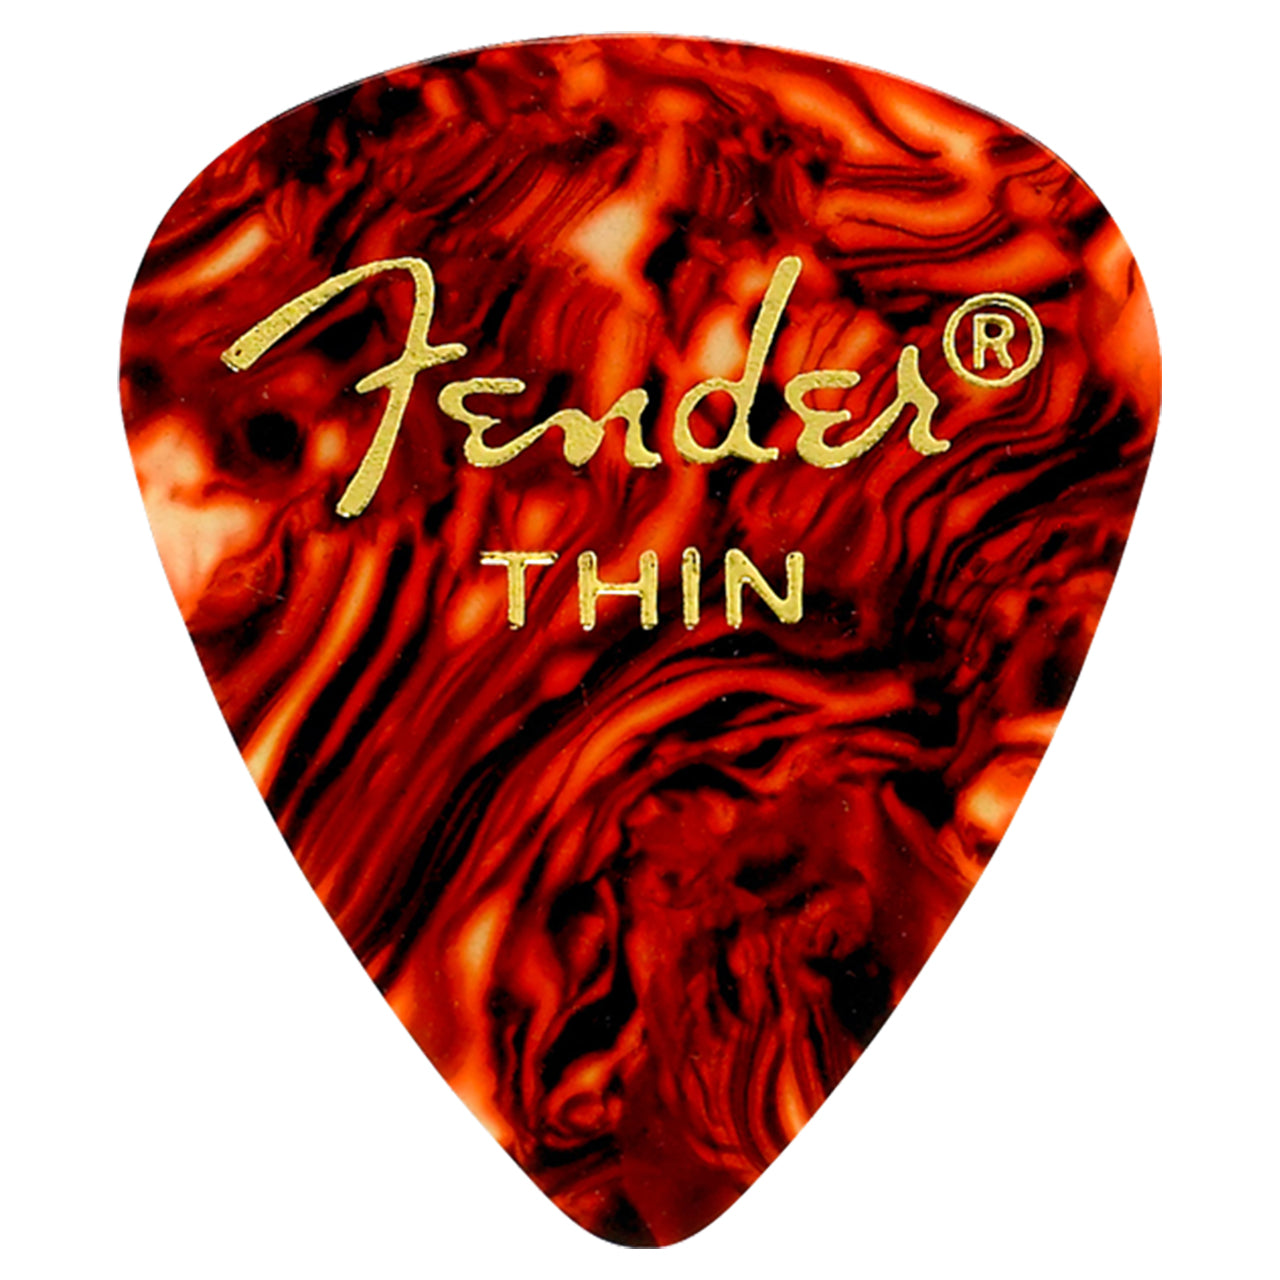 Fender 351 Shape Thin Classic Guitar Pick, 12-Pack